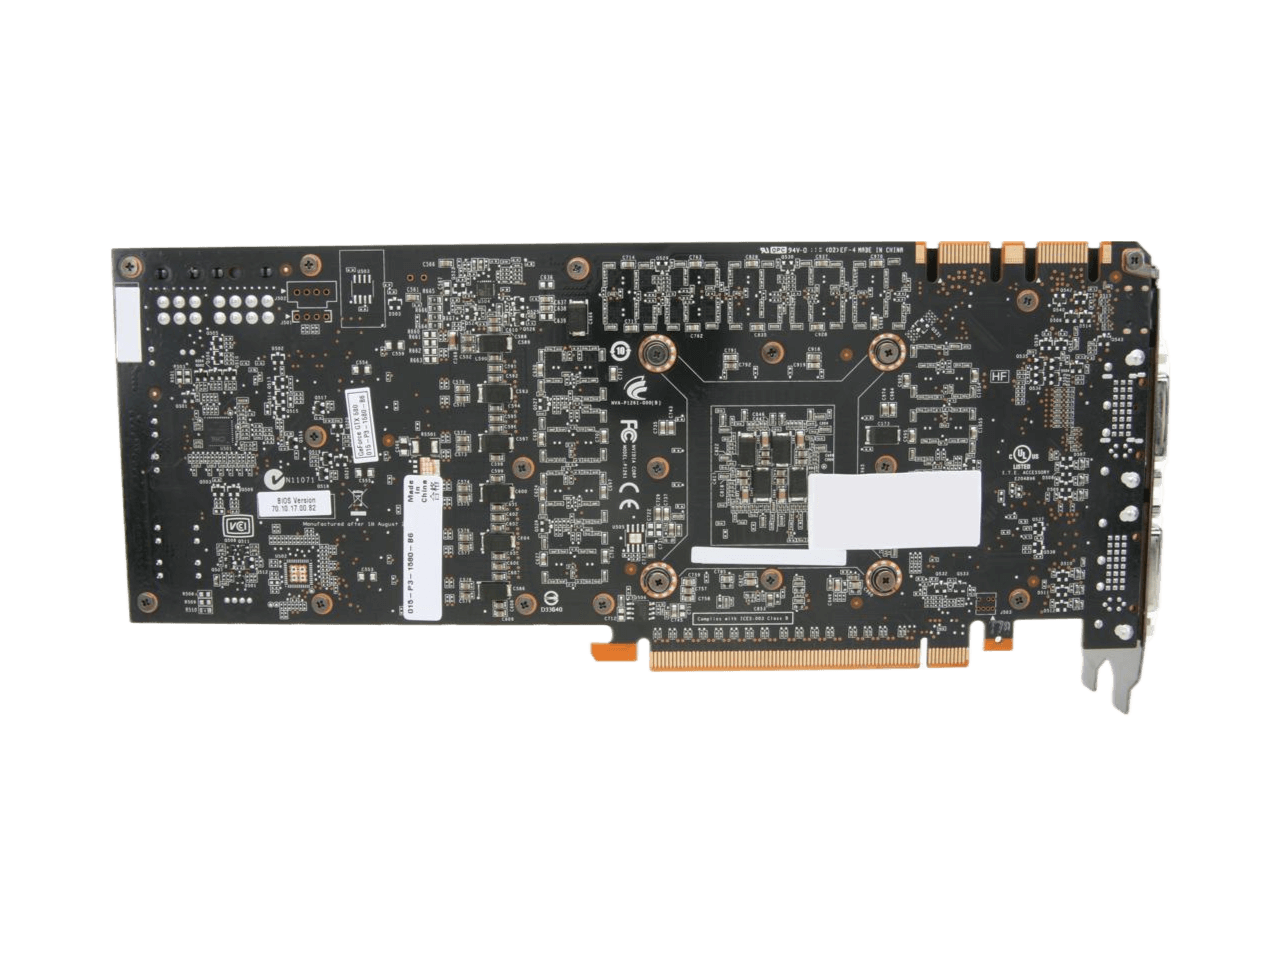 EVGA GeForce GTX 580 3GB 384-Bit GDDR5 DirectX 11 PCI Express 2.0 x16 HDCP Ready SLI Support Video Card 03G-P3-1584-AR